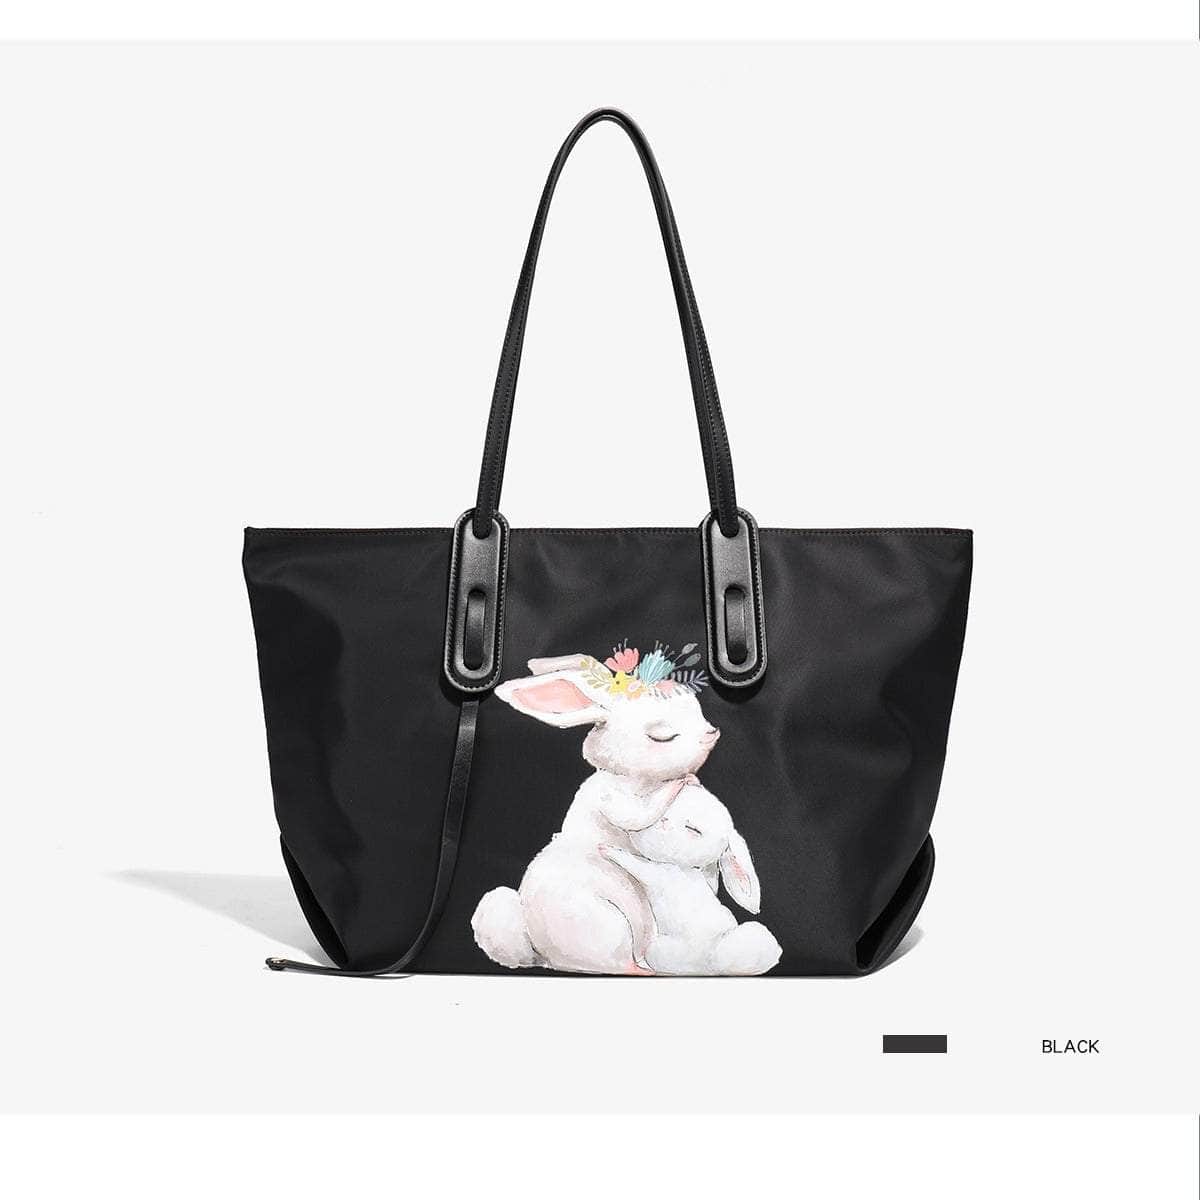 Bunny Print Tote Bag Black